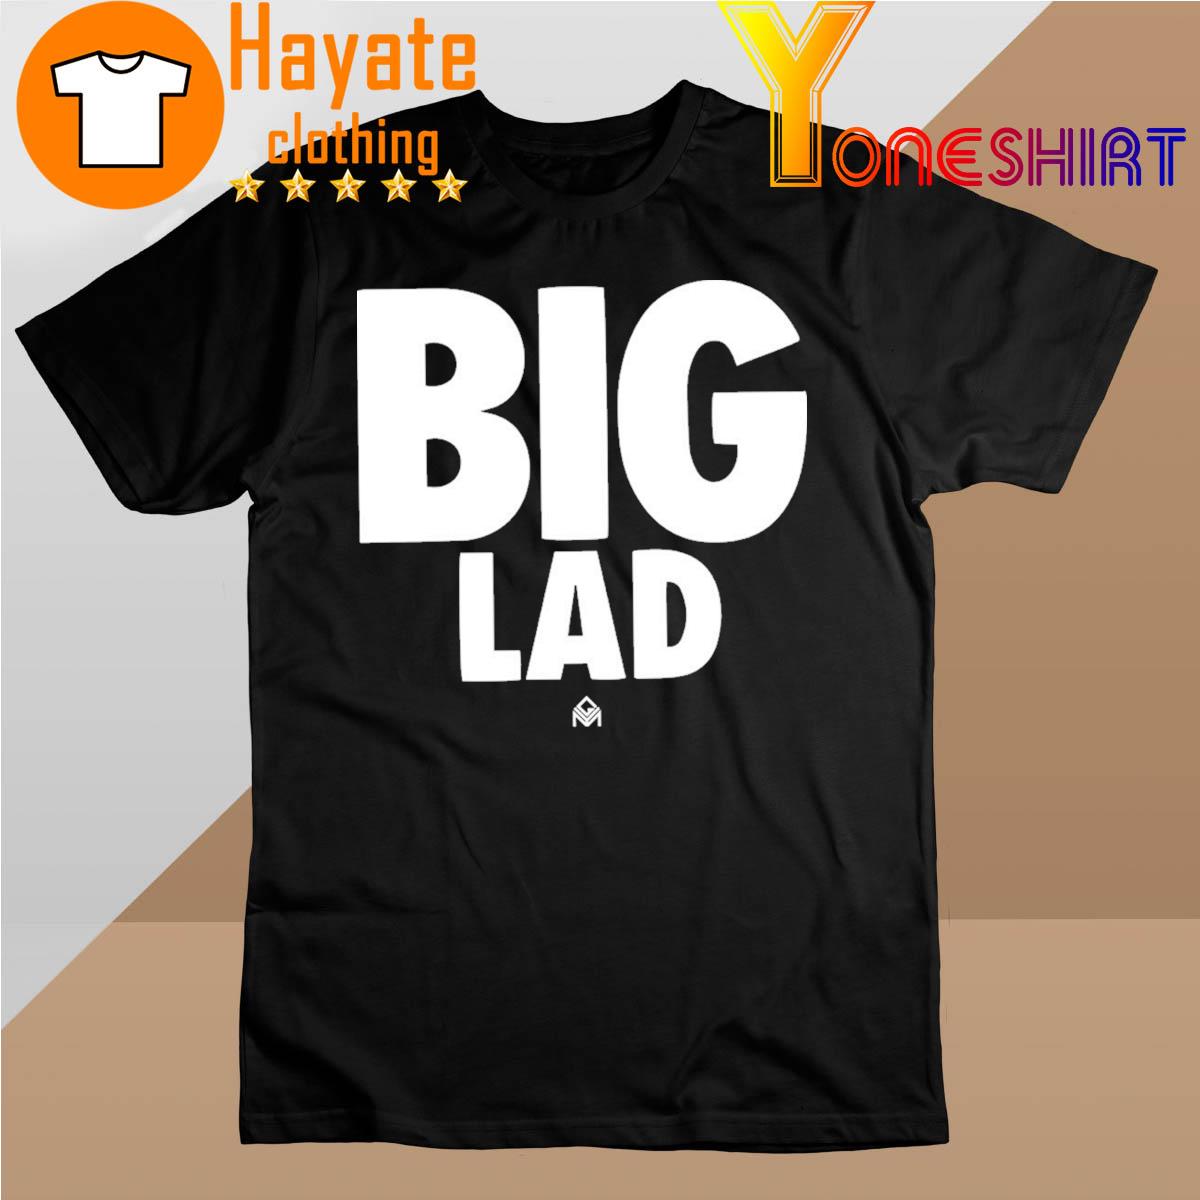 Big Lad shirt